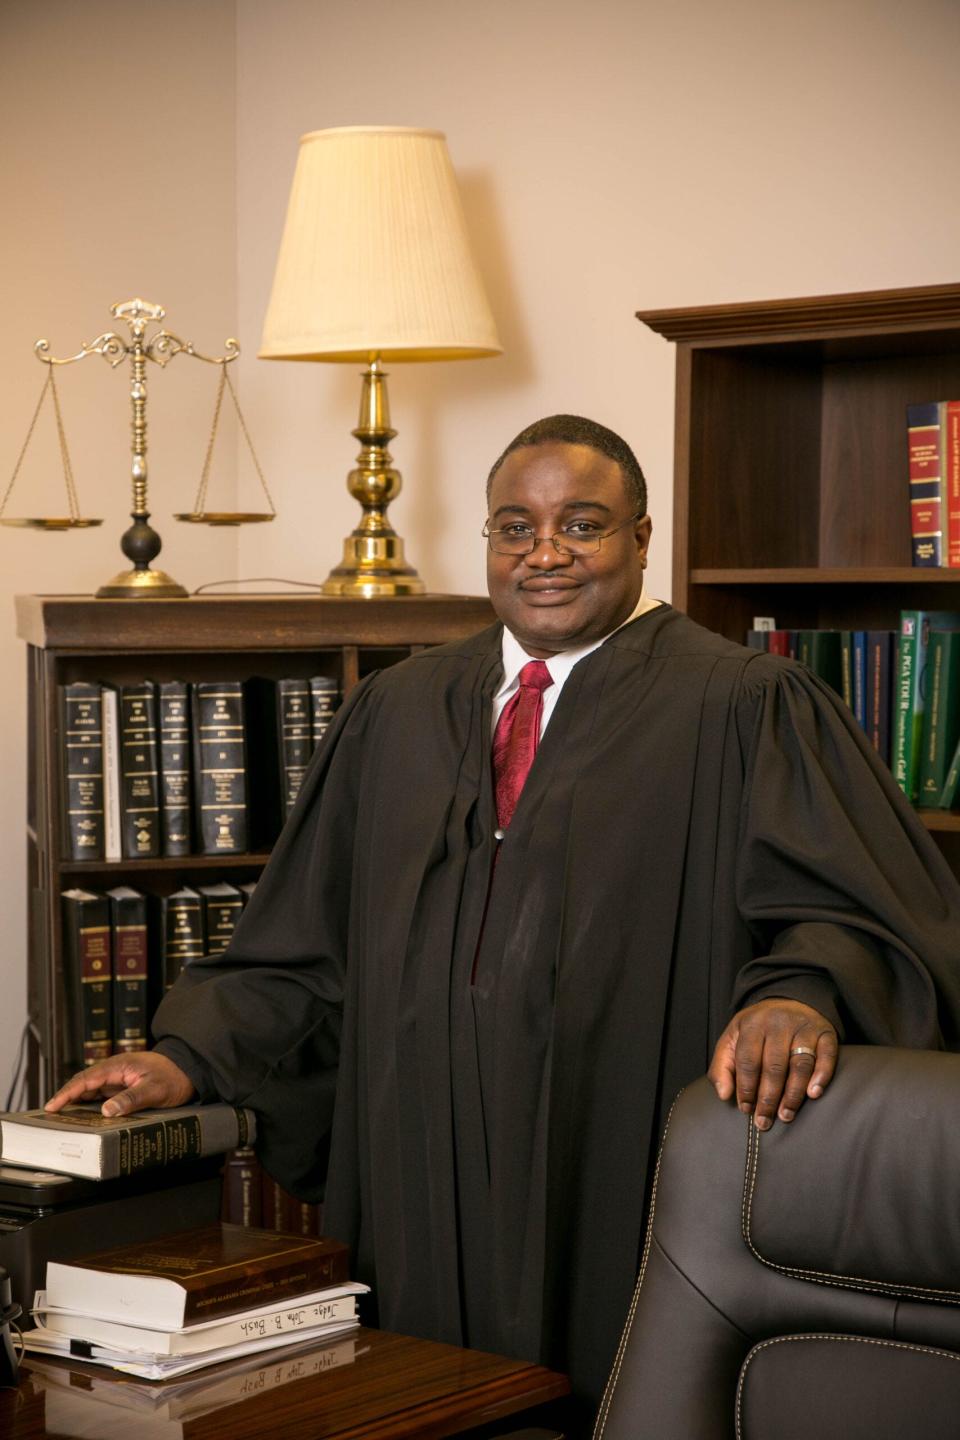 Judge Bill Lewis